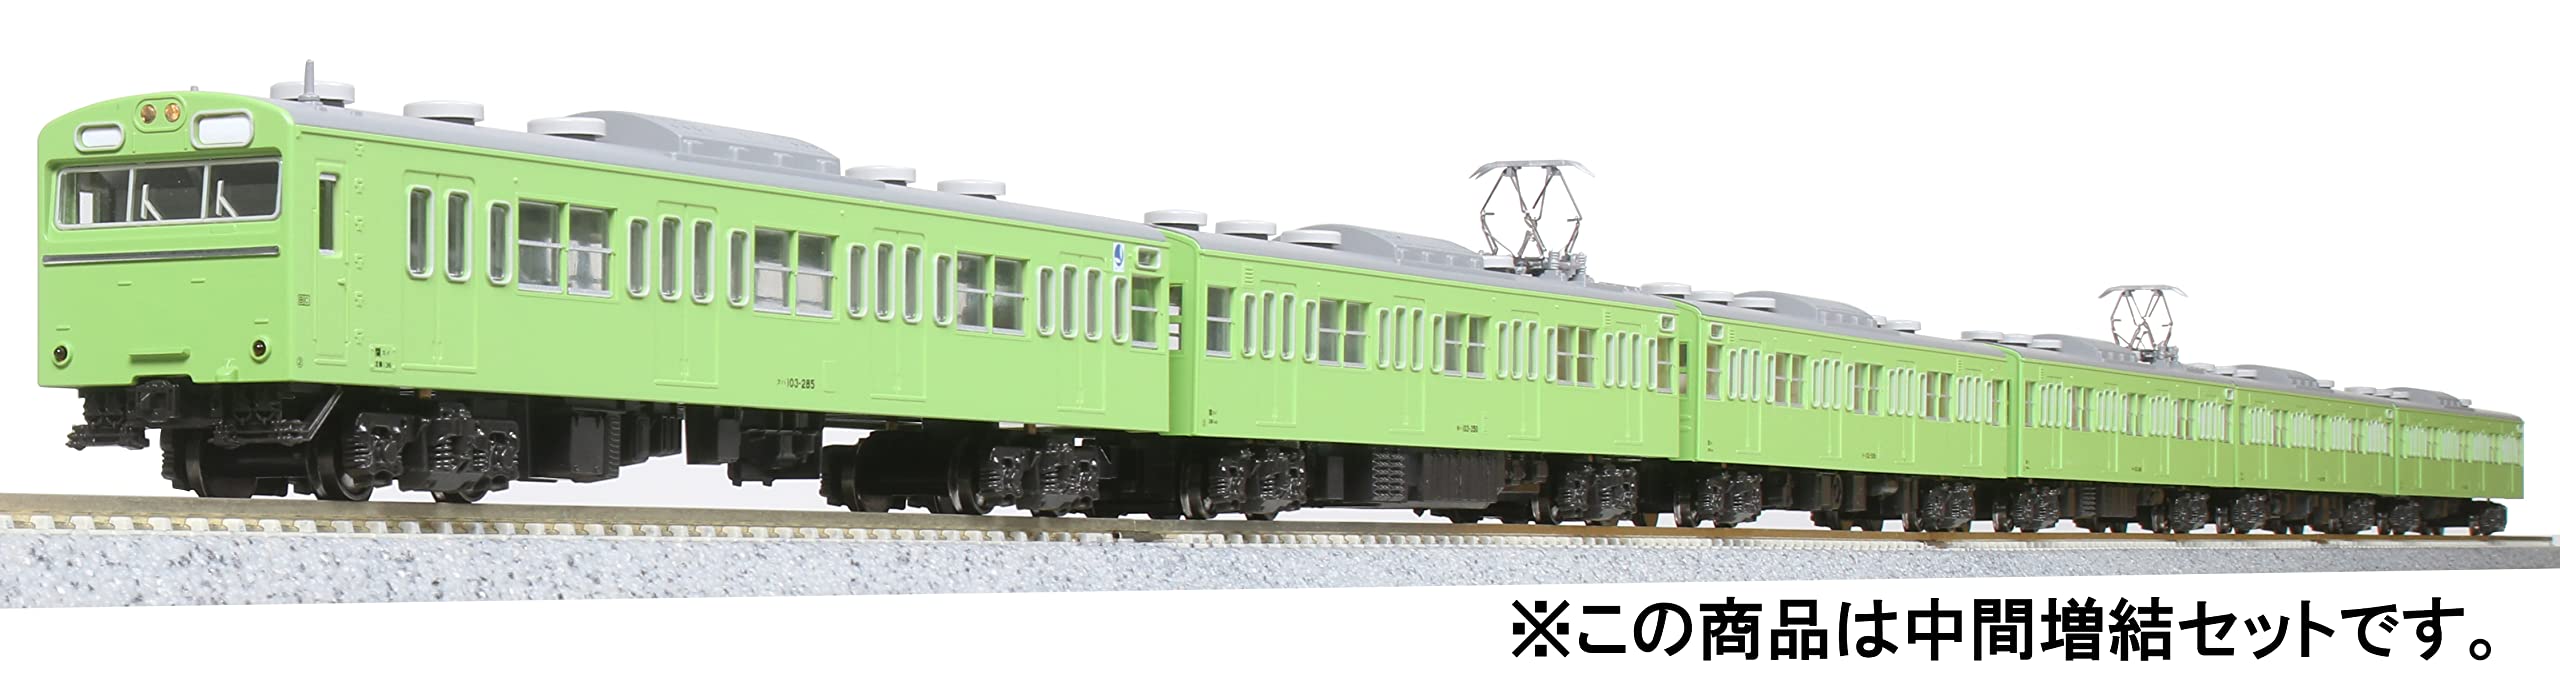 Kato Spur N 103 Serie Mittelstufe 3-Wagen-Set Eisenbahn Modellzug 10-1744C